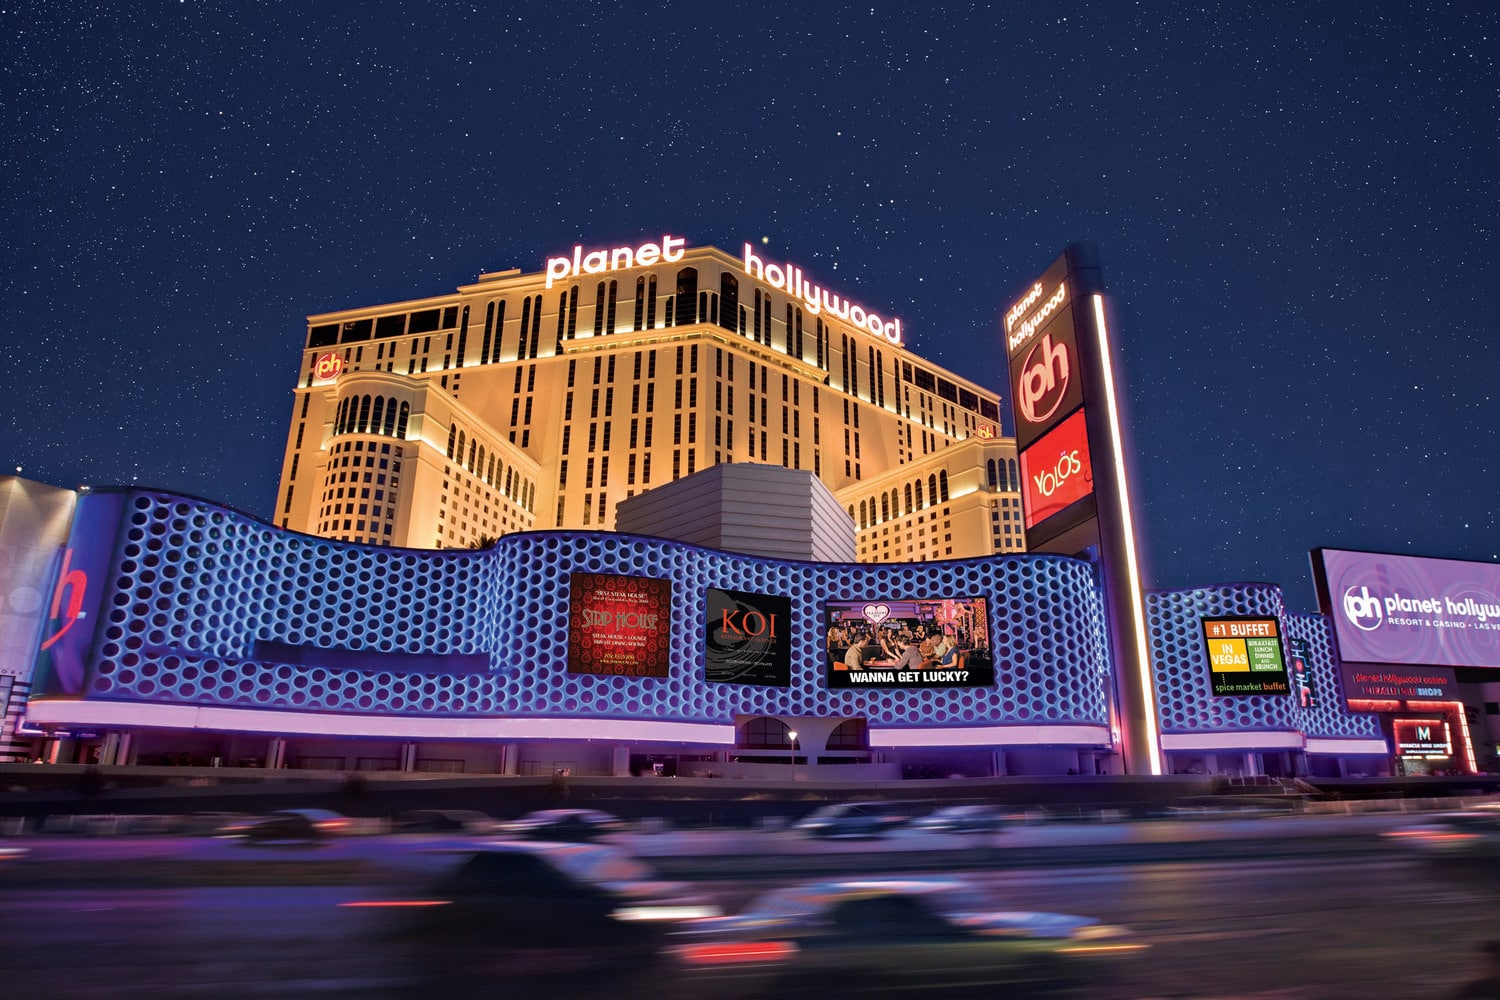 Planet Hollywood Las Vegas, 28601 Reviews